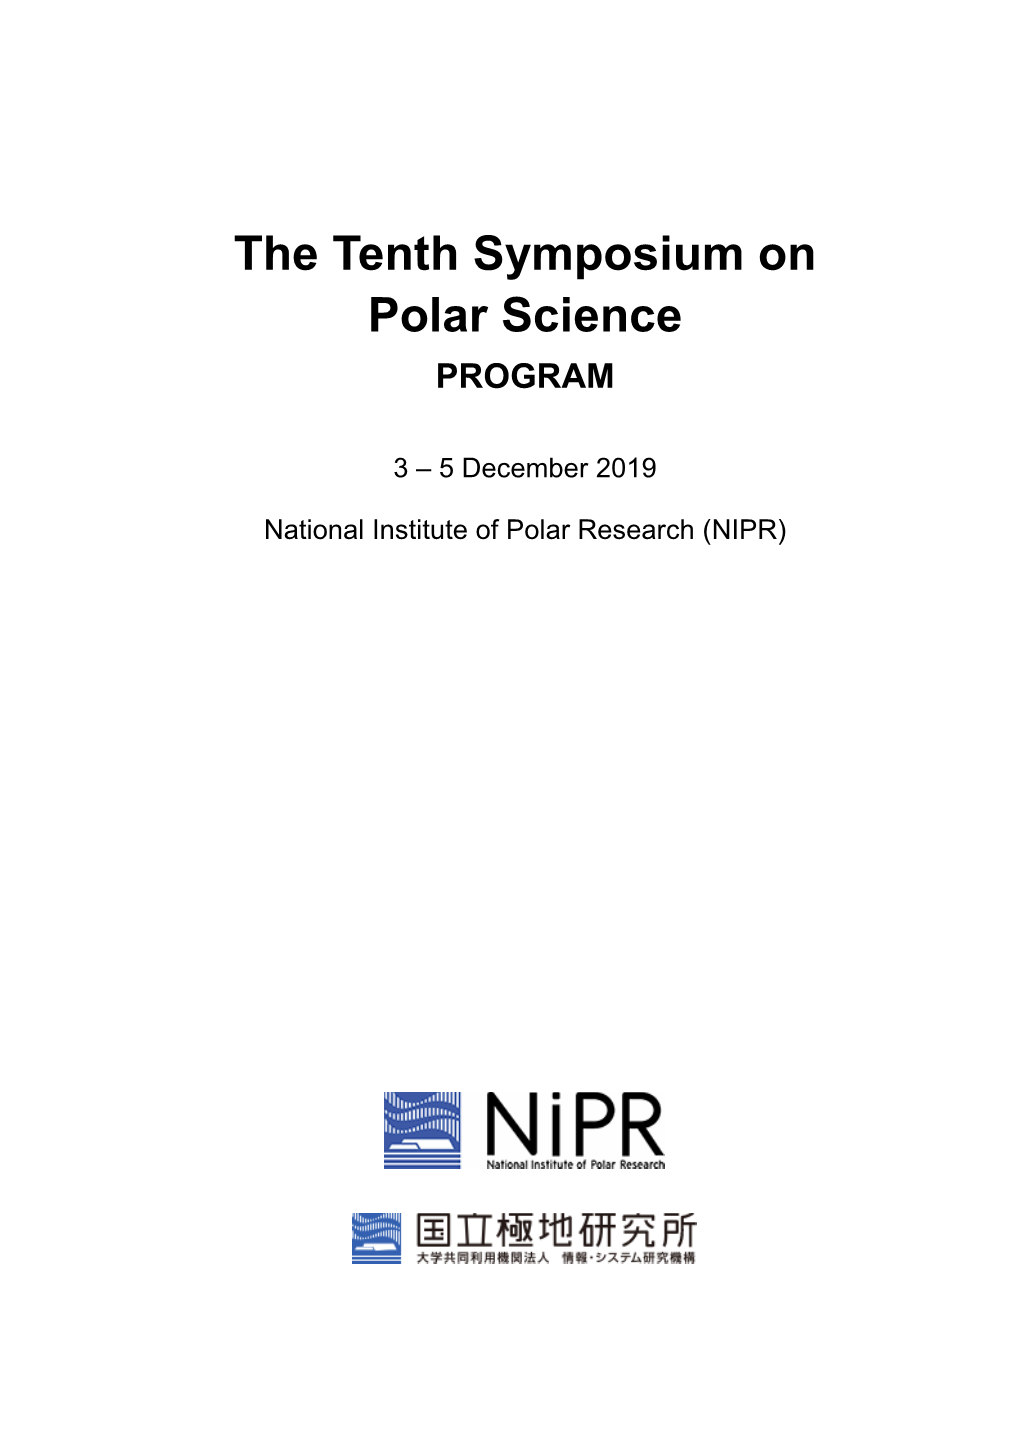 The Tenth Symposium on Polar Science PROGRAM